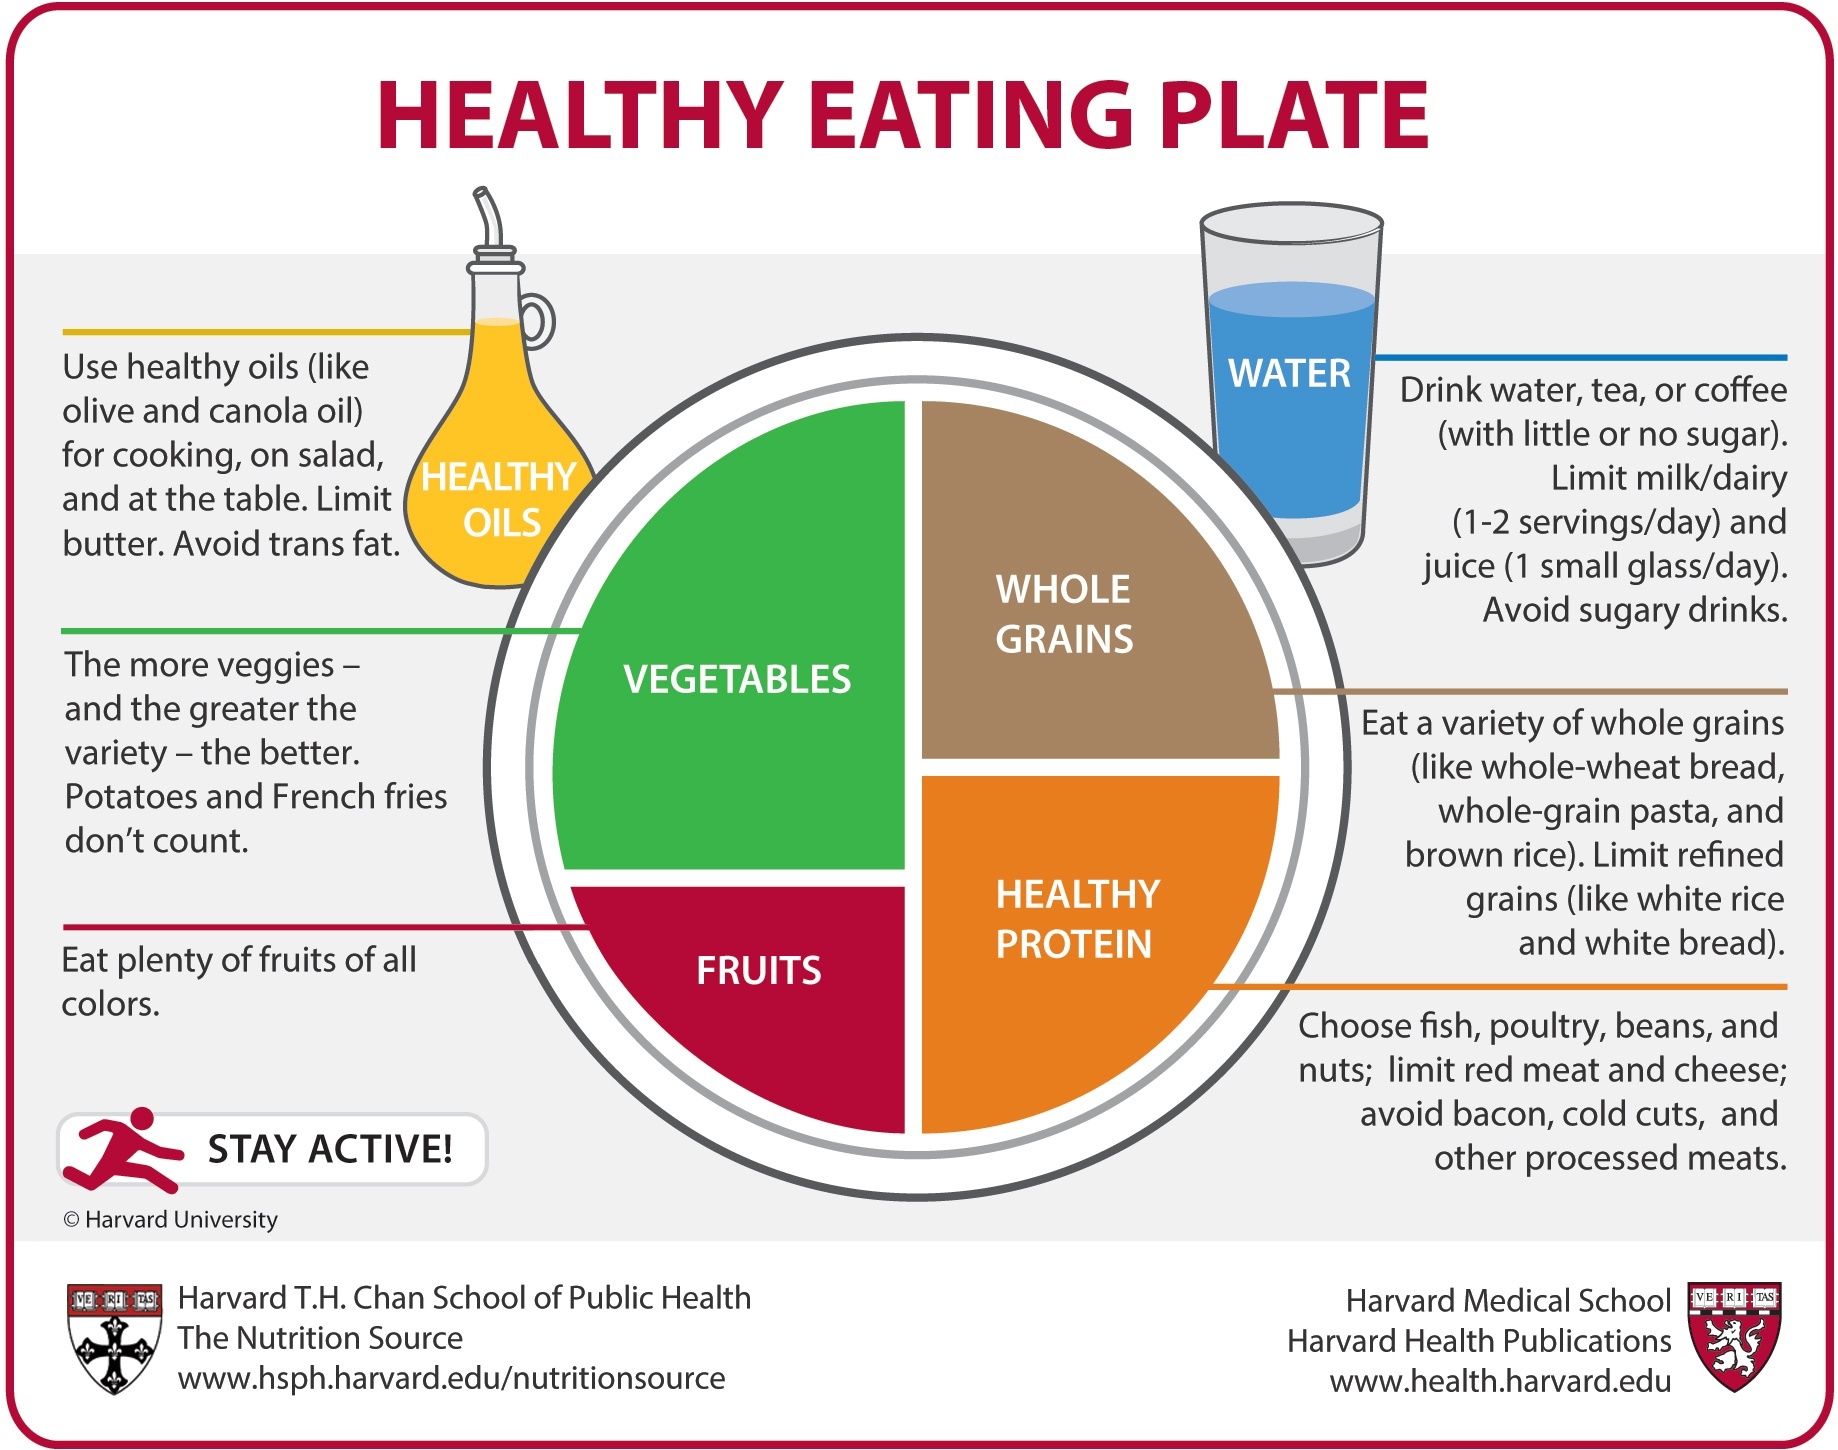 Why We Love Harvard’s Healthy Eating Plate